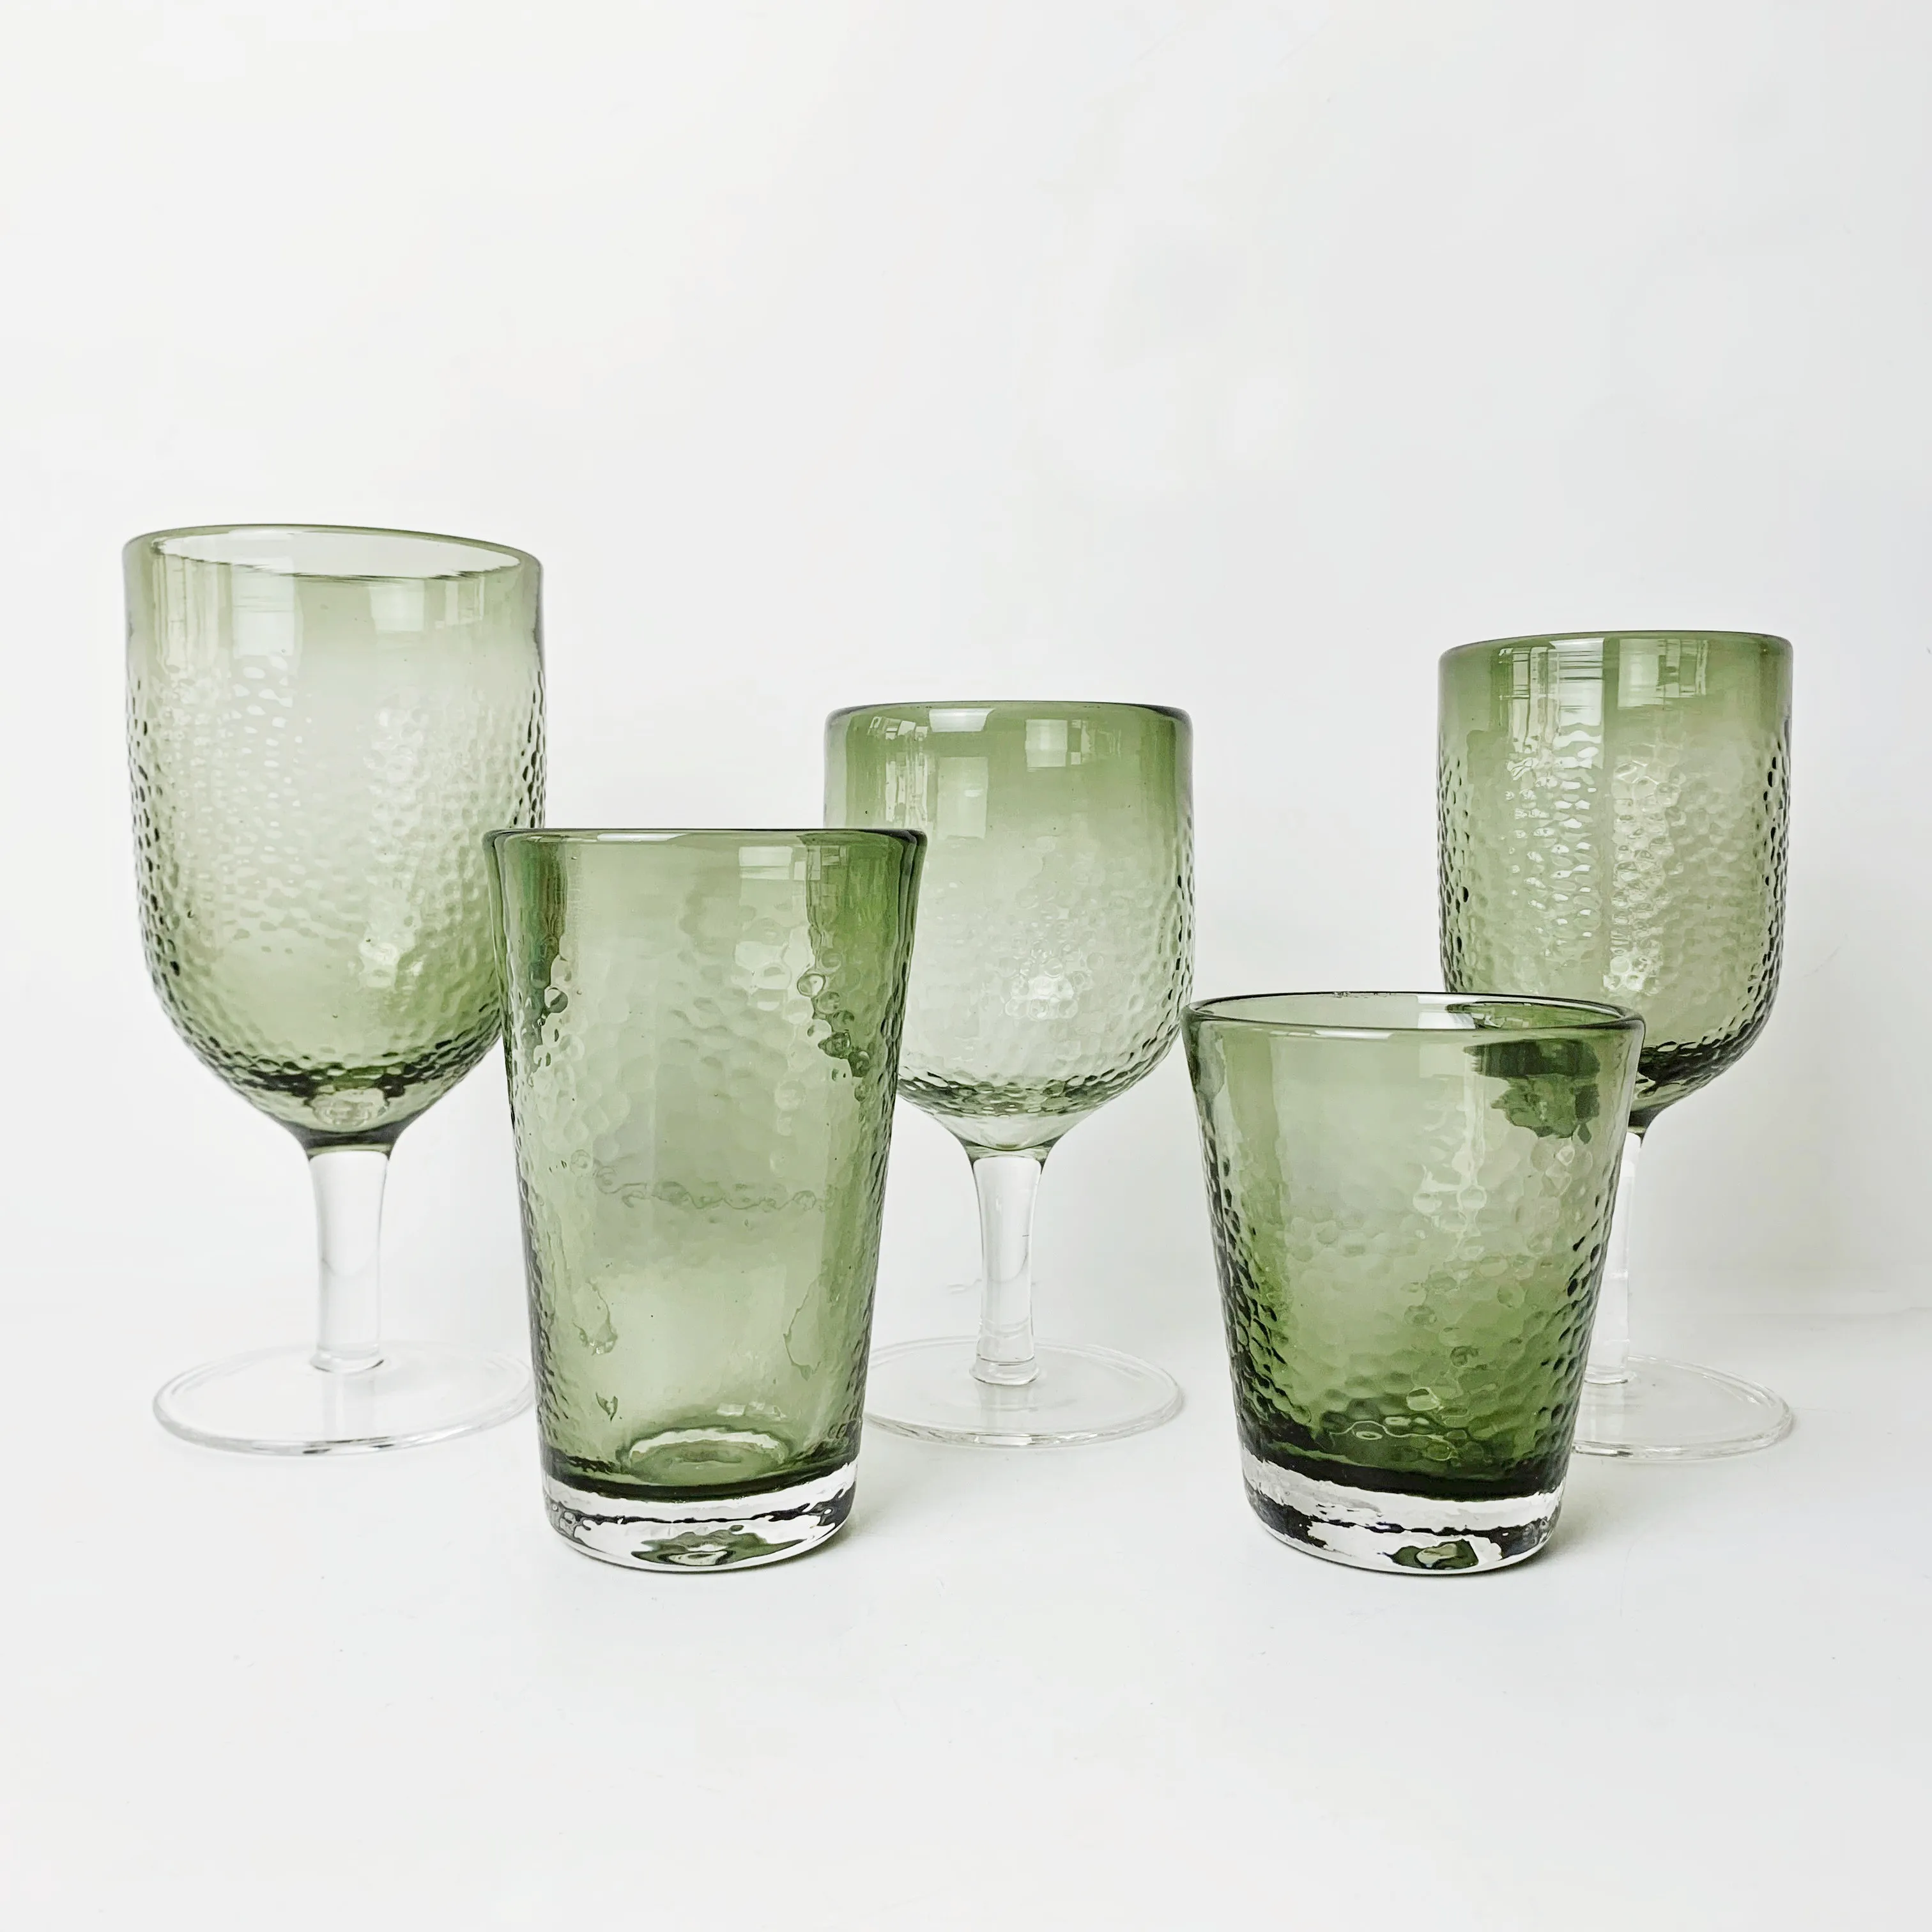 Color wine glass series crystal goblet hot sale glassware